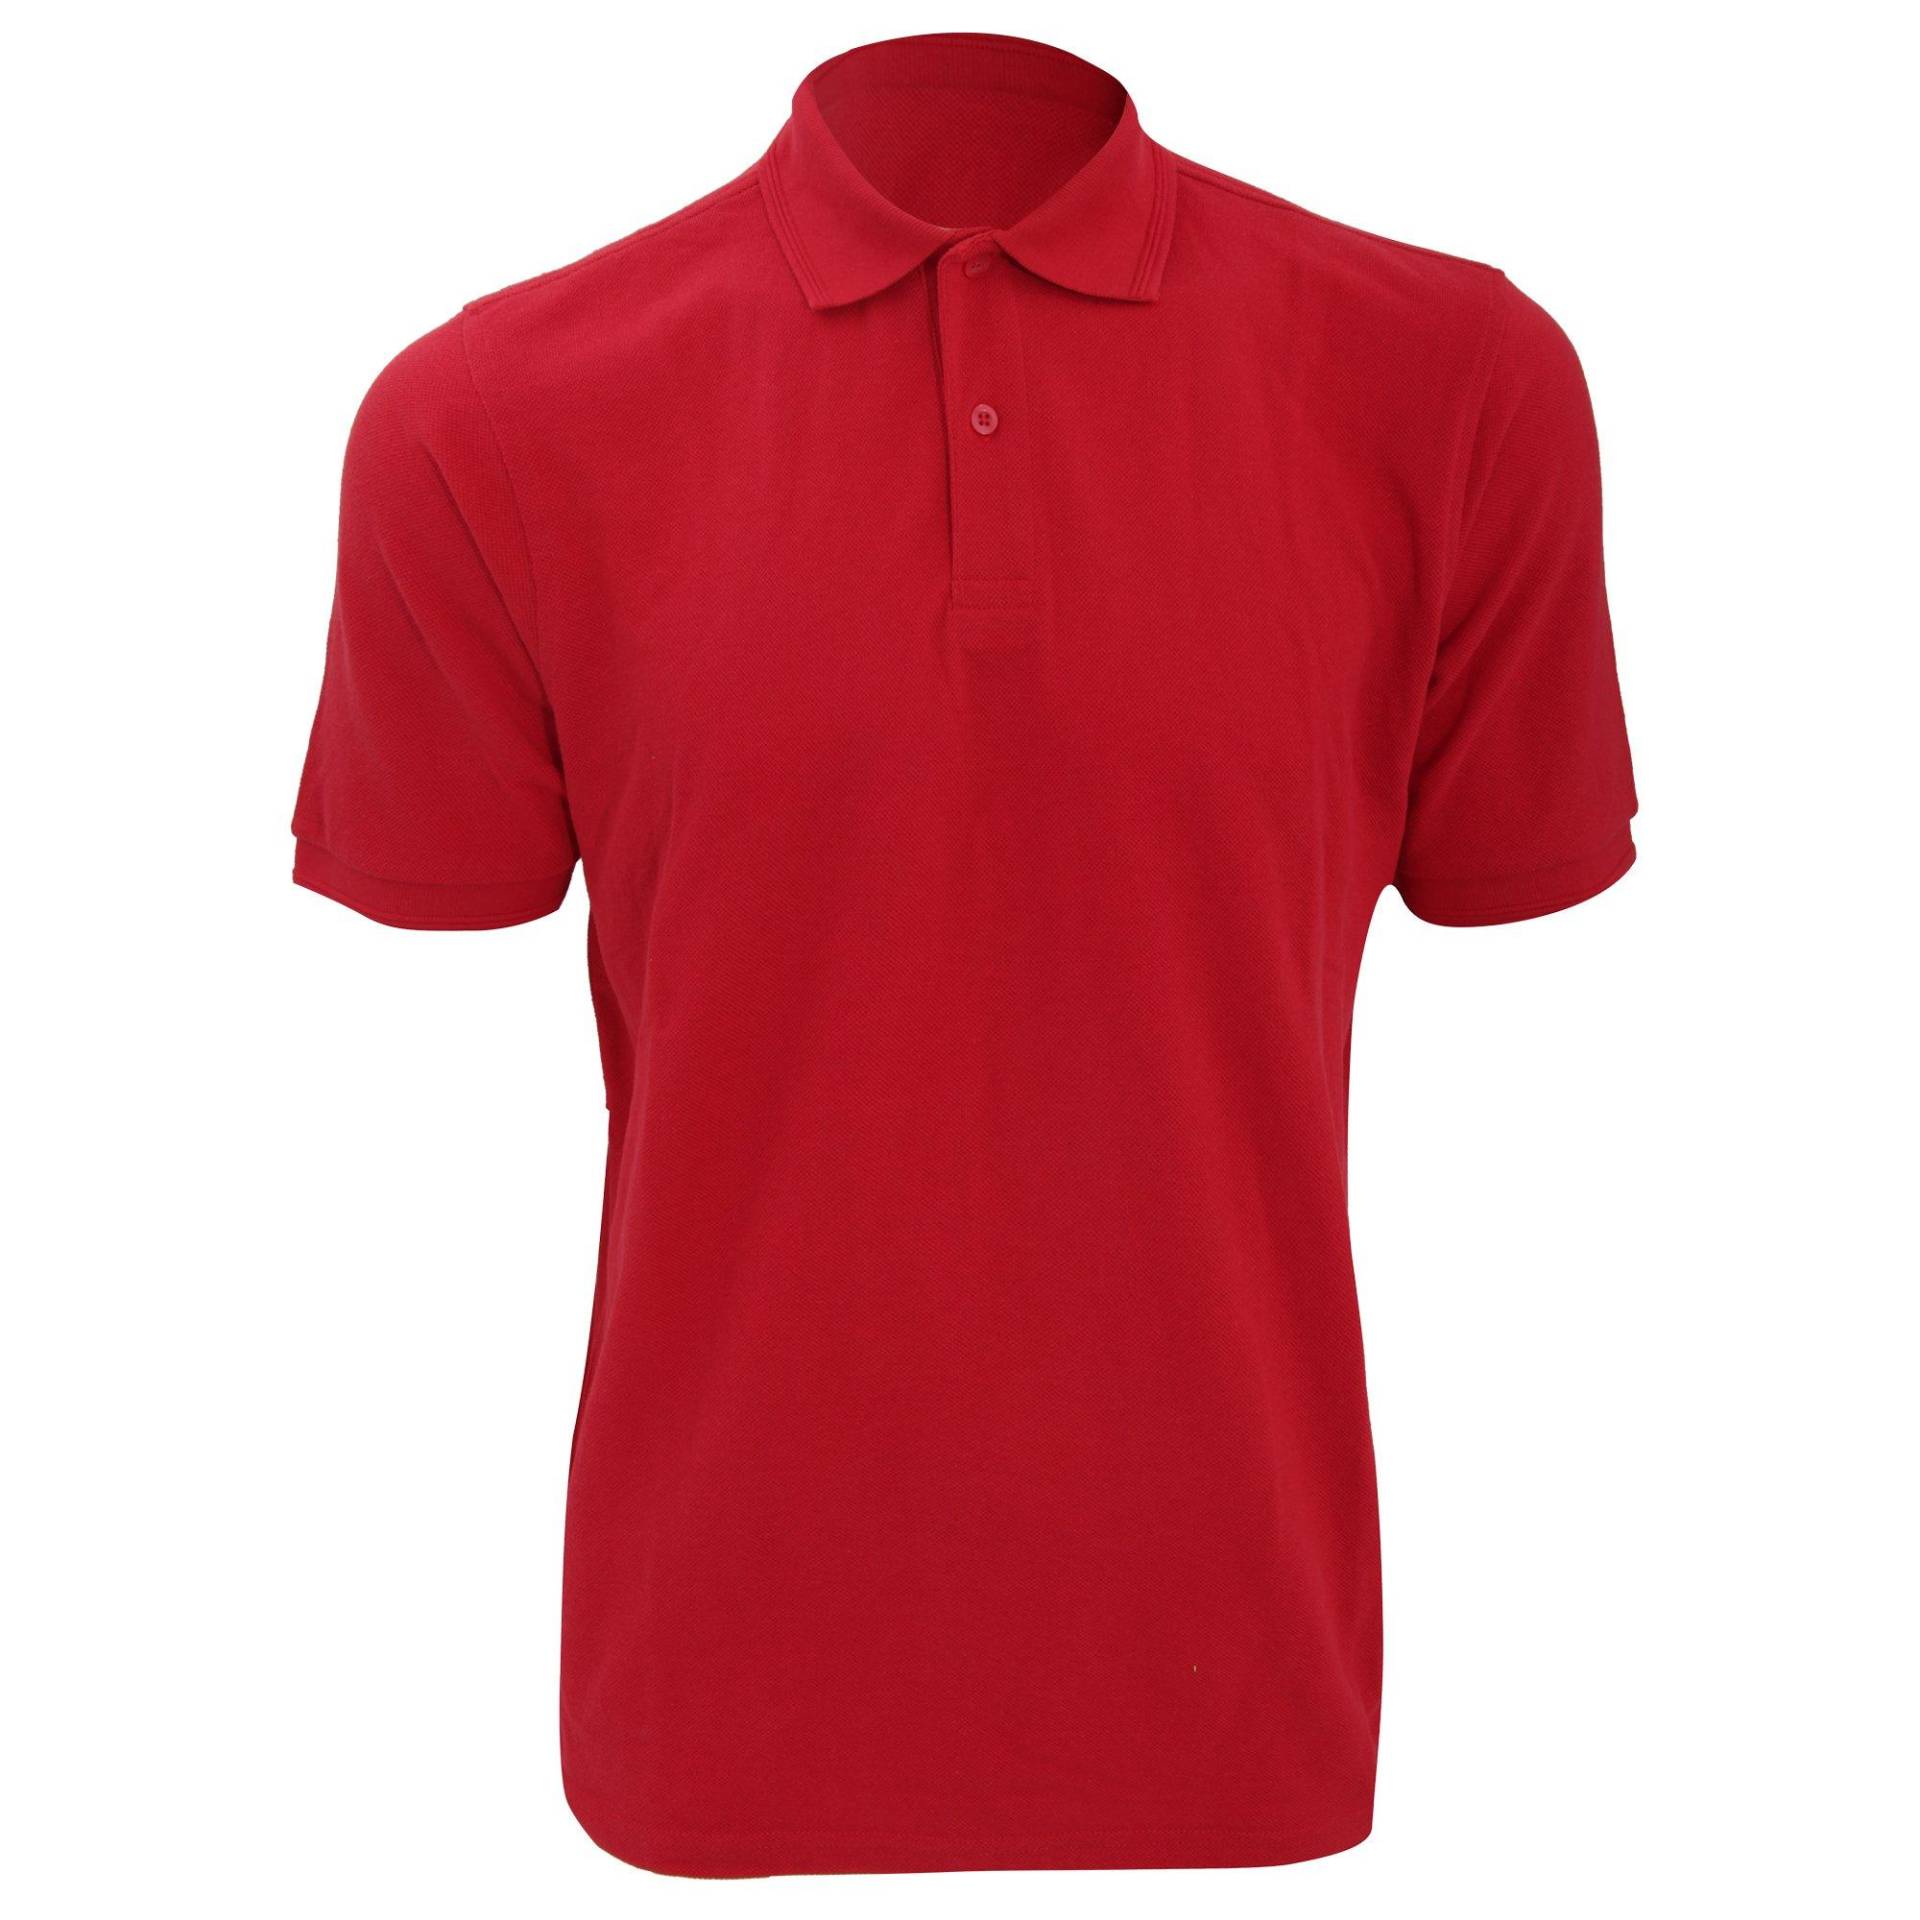 Ripple Collar & Cuff Kurzarm Polo Shirt Herren Rot Bunt L von Russell